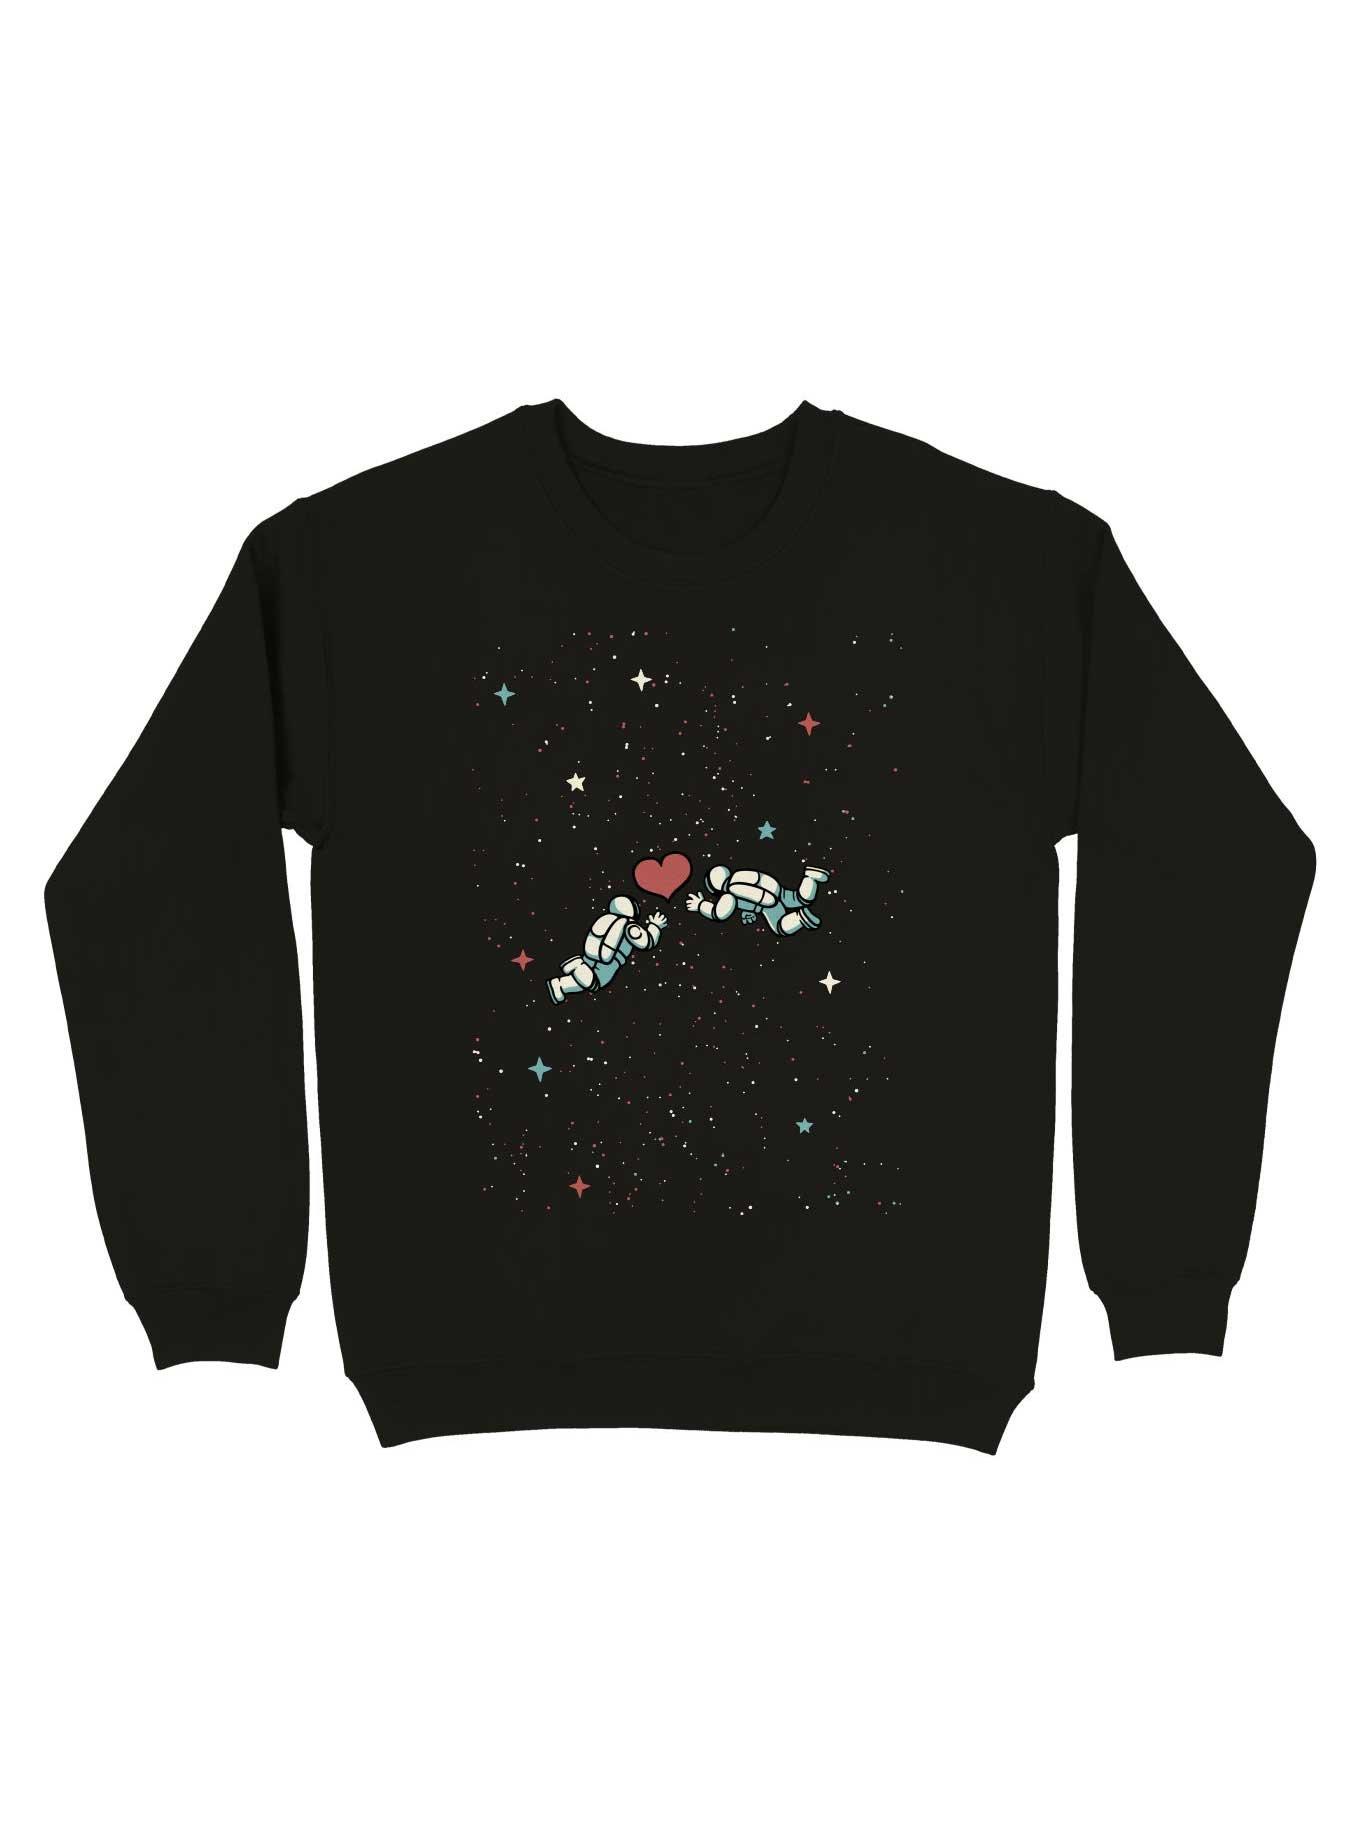 Astronaut Love Floating Space Sweatshirt